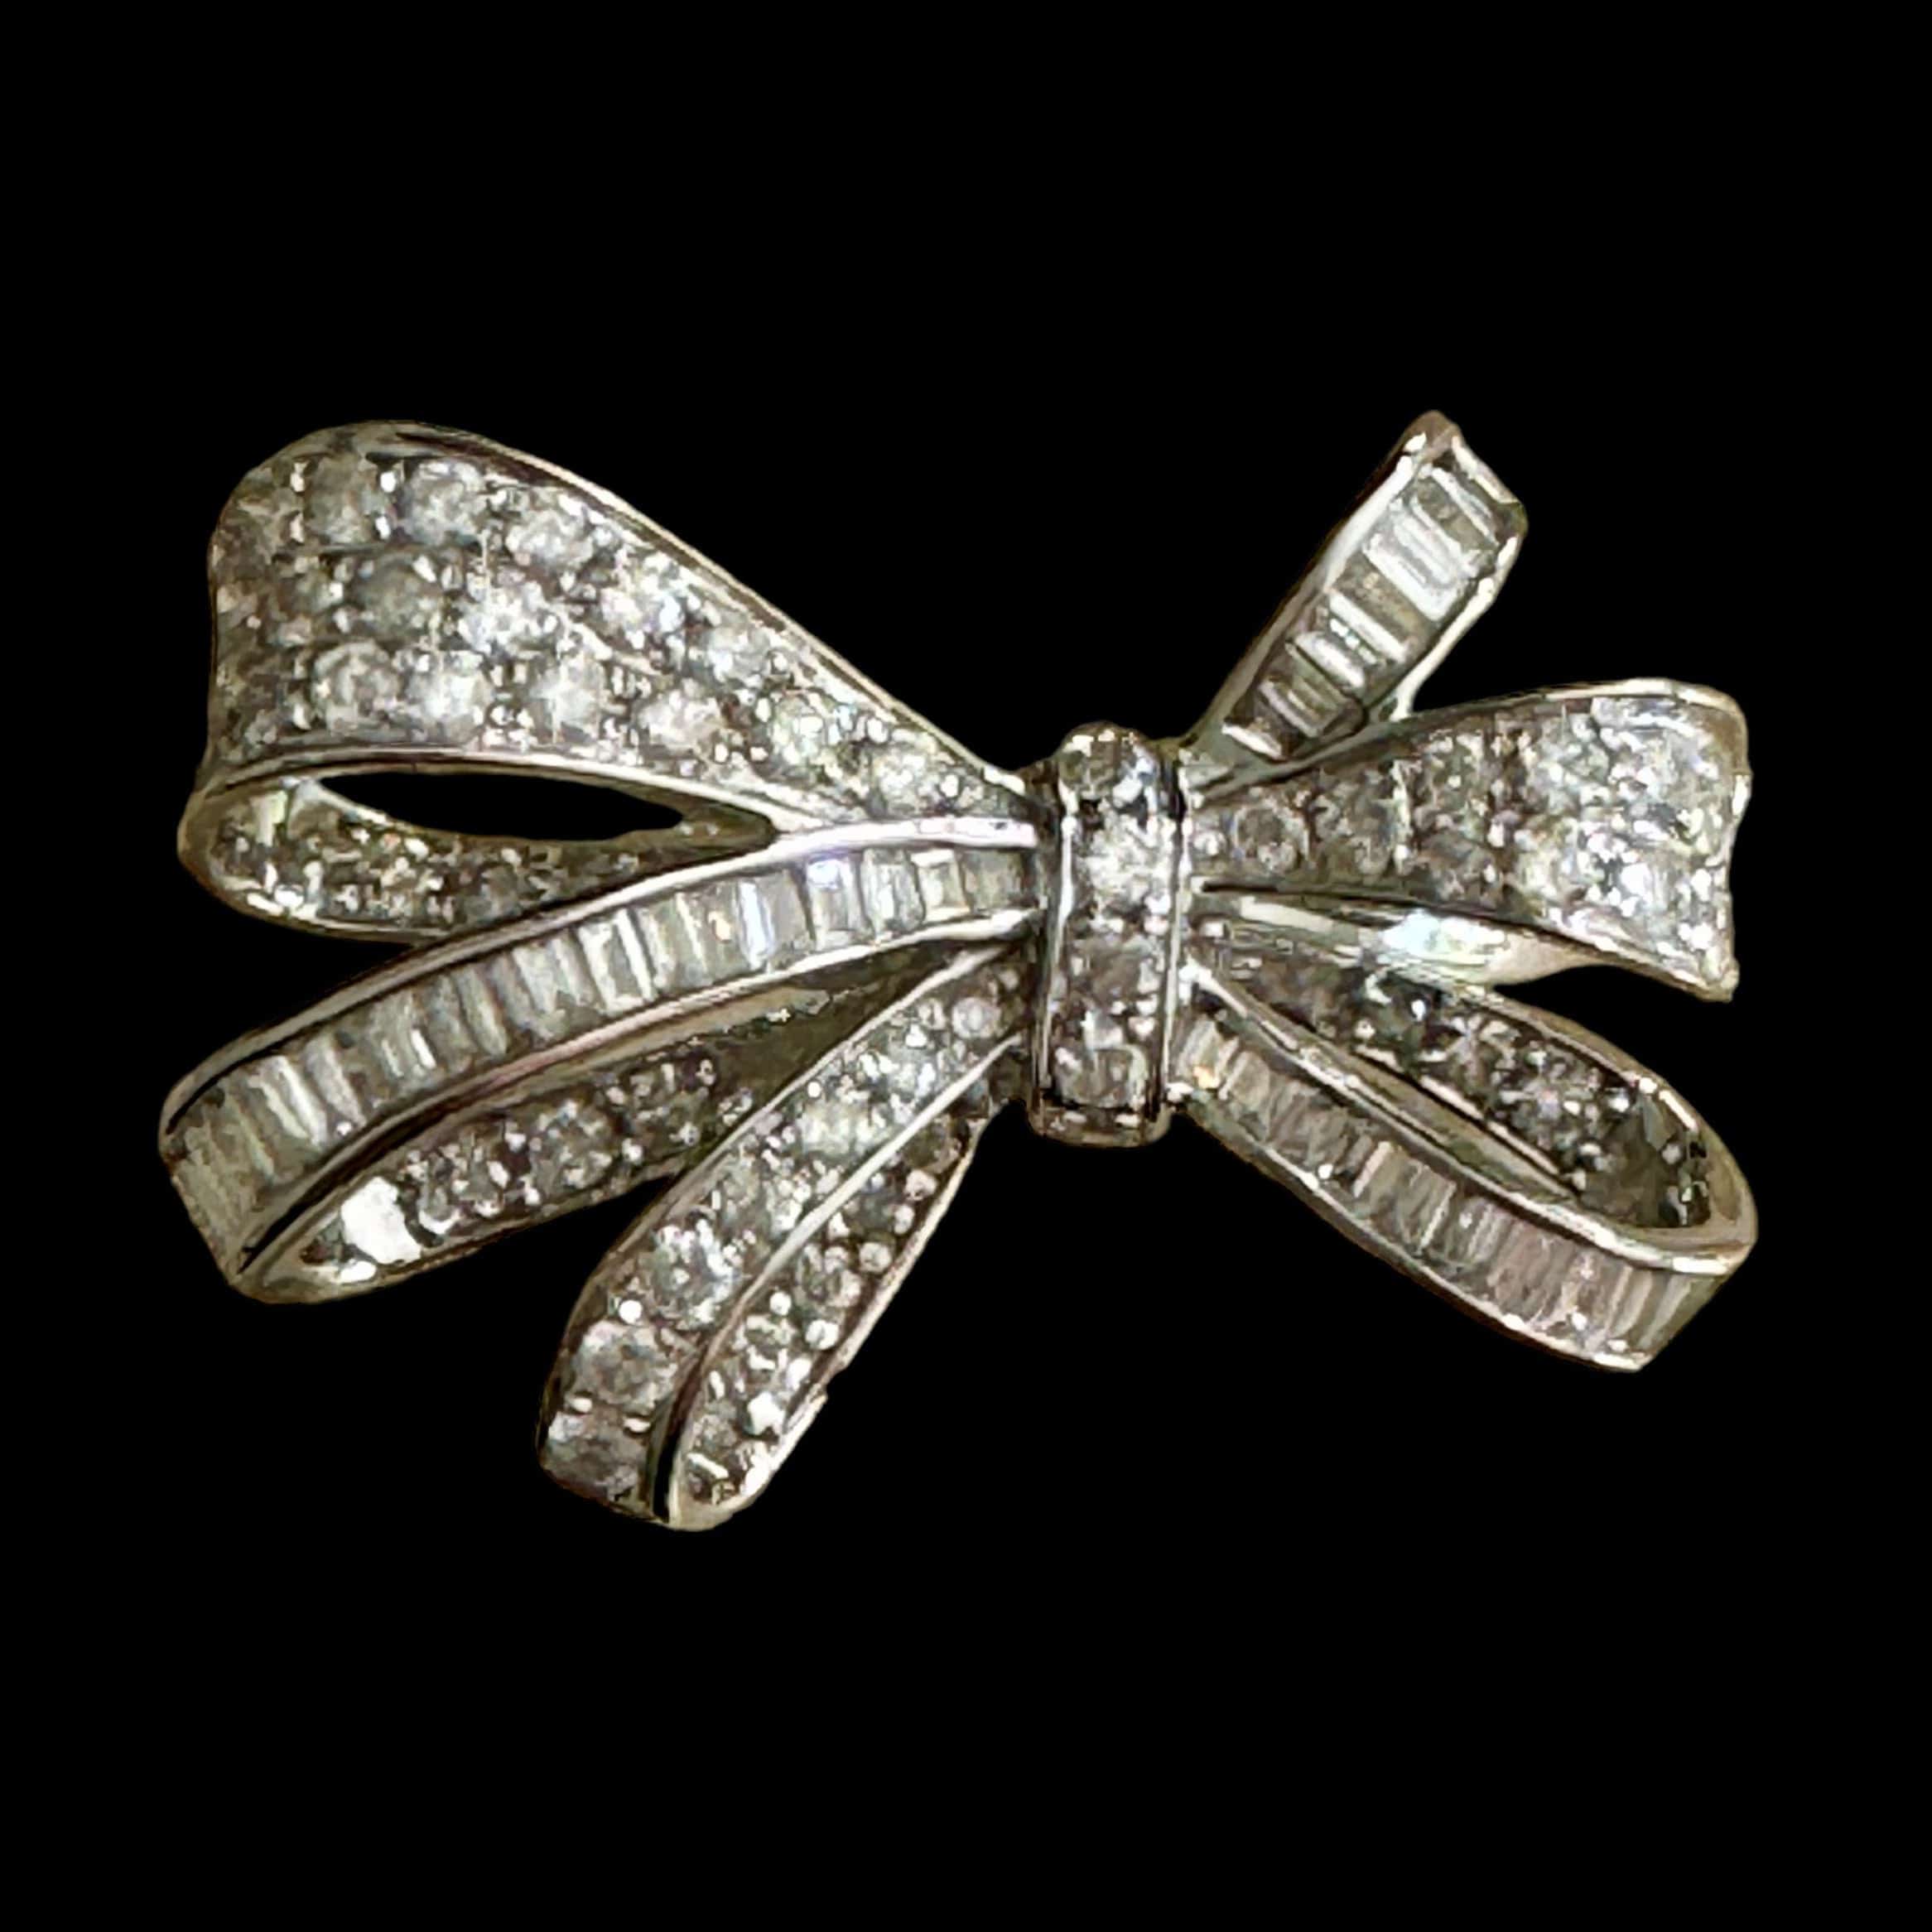 Luxury Promise Bow Shaped Diamond Ring set in 18K White Gold